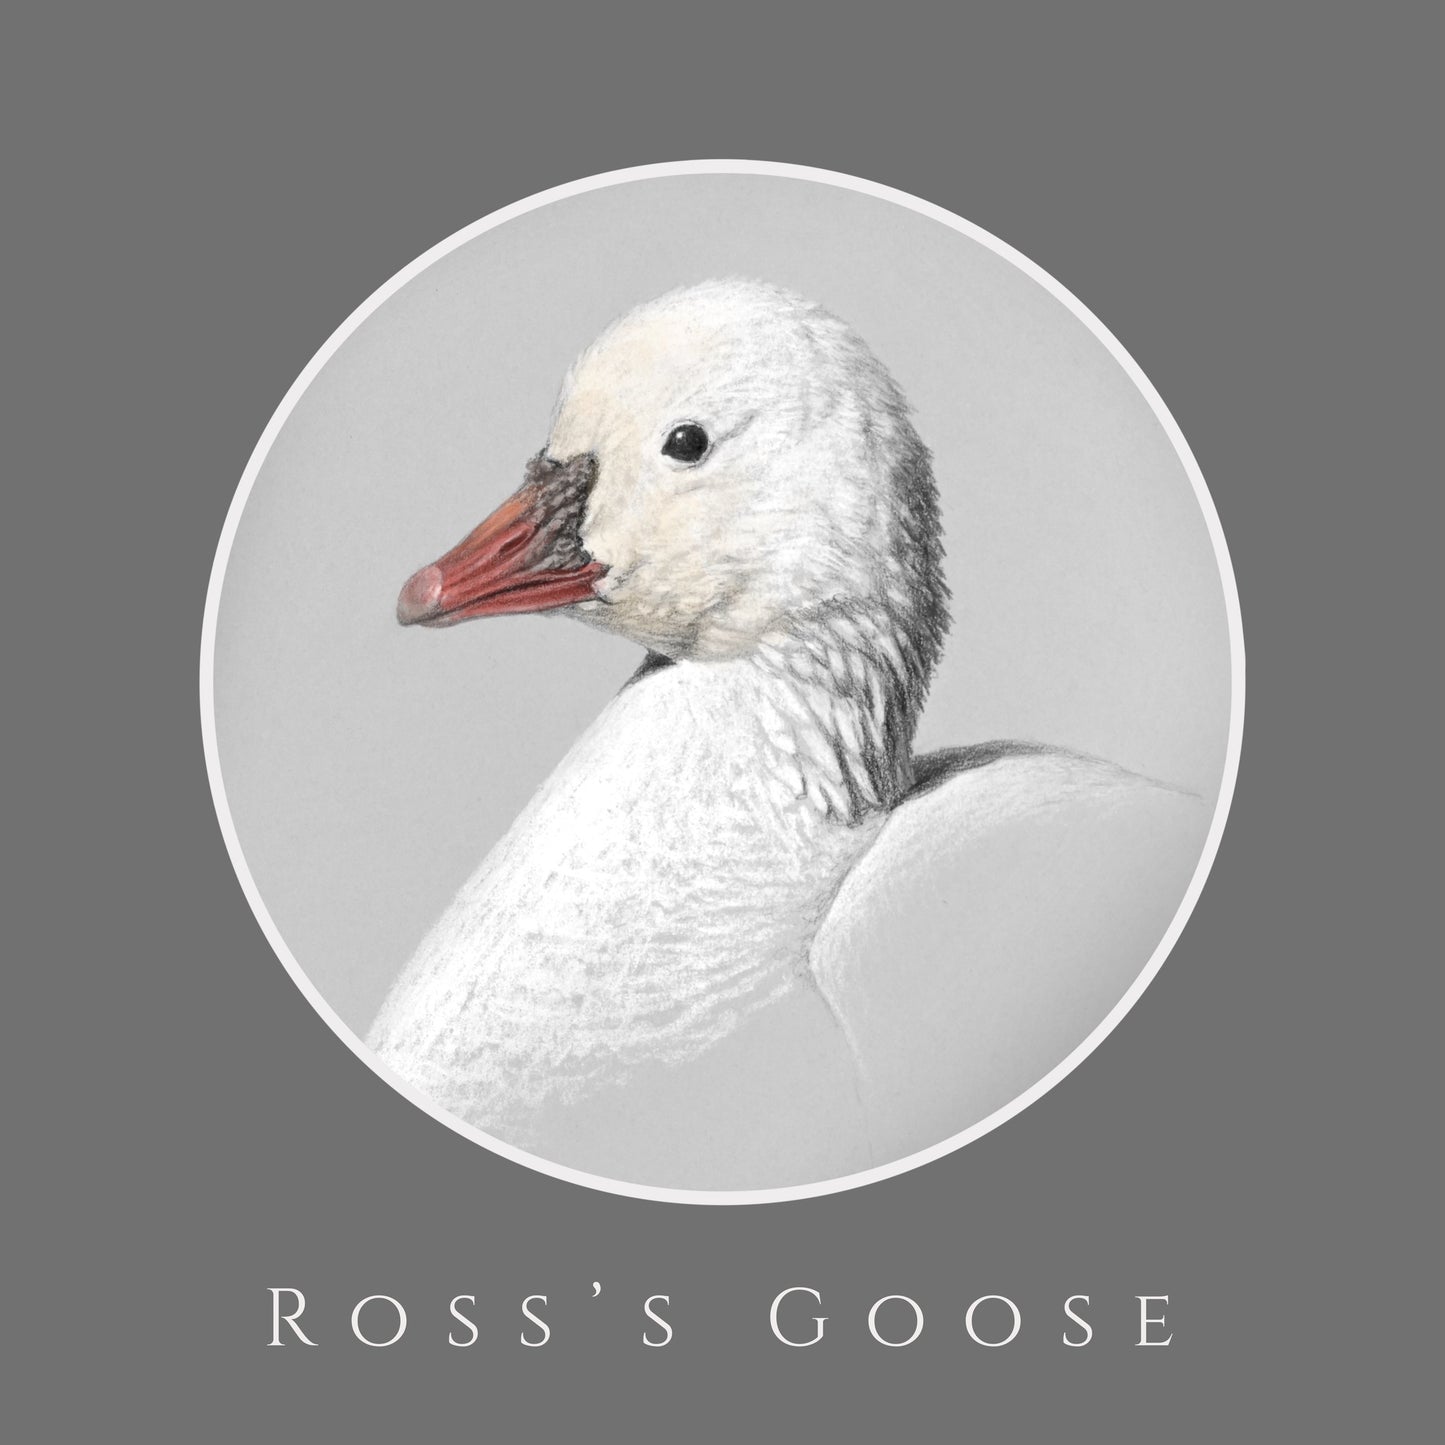 Ross's Goose